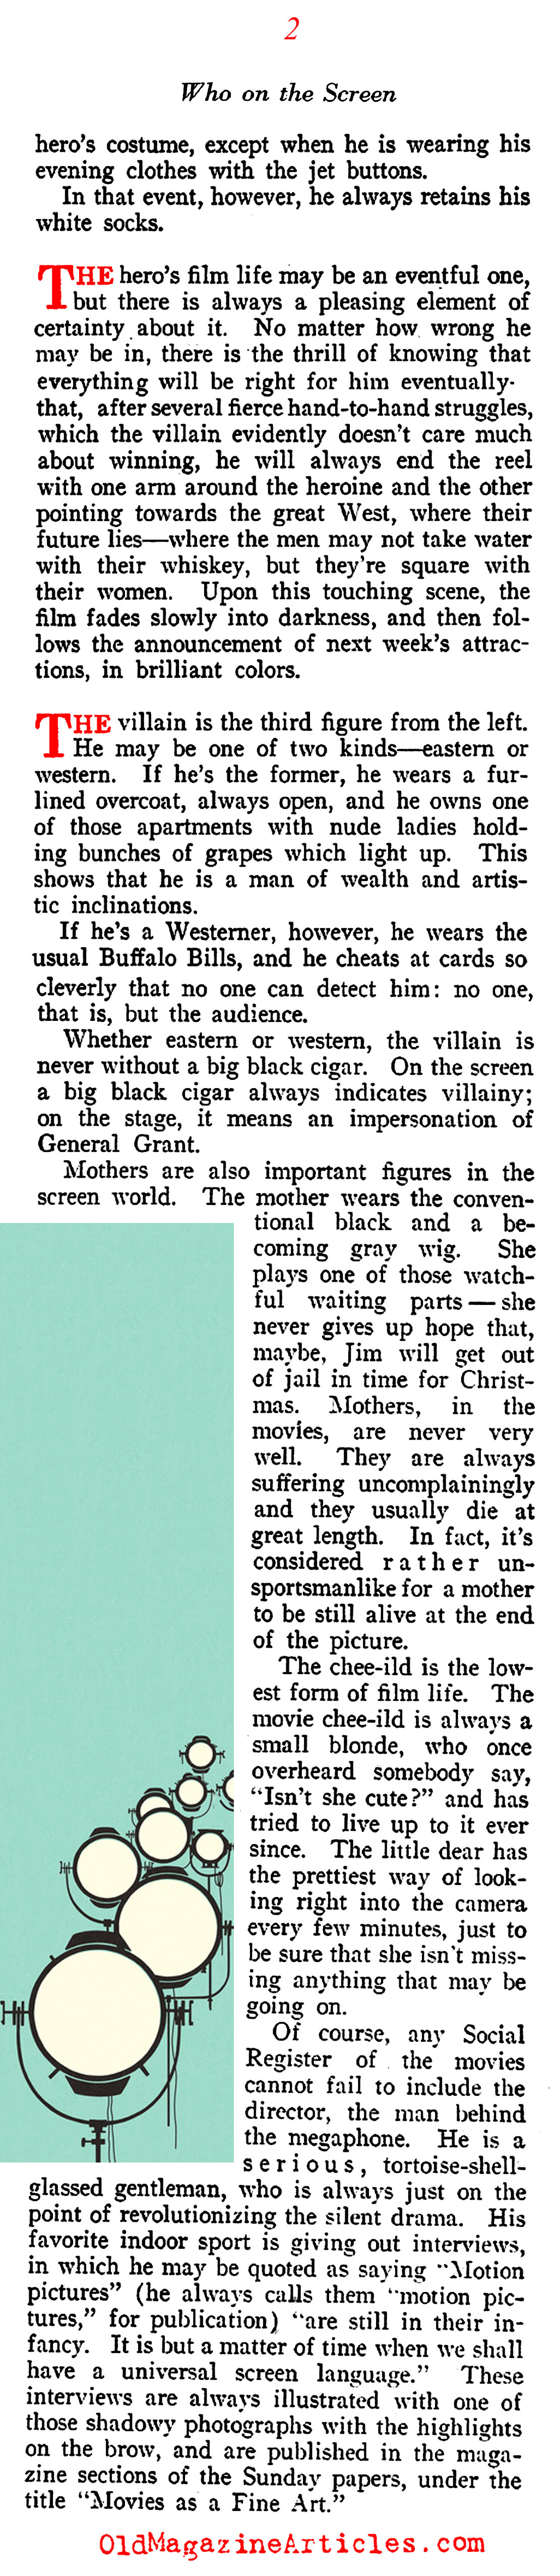 Douglas Fairbanks on Hollywood  (Vanity Fair, 1918)